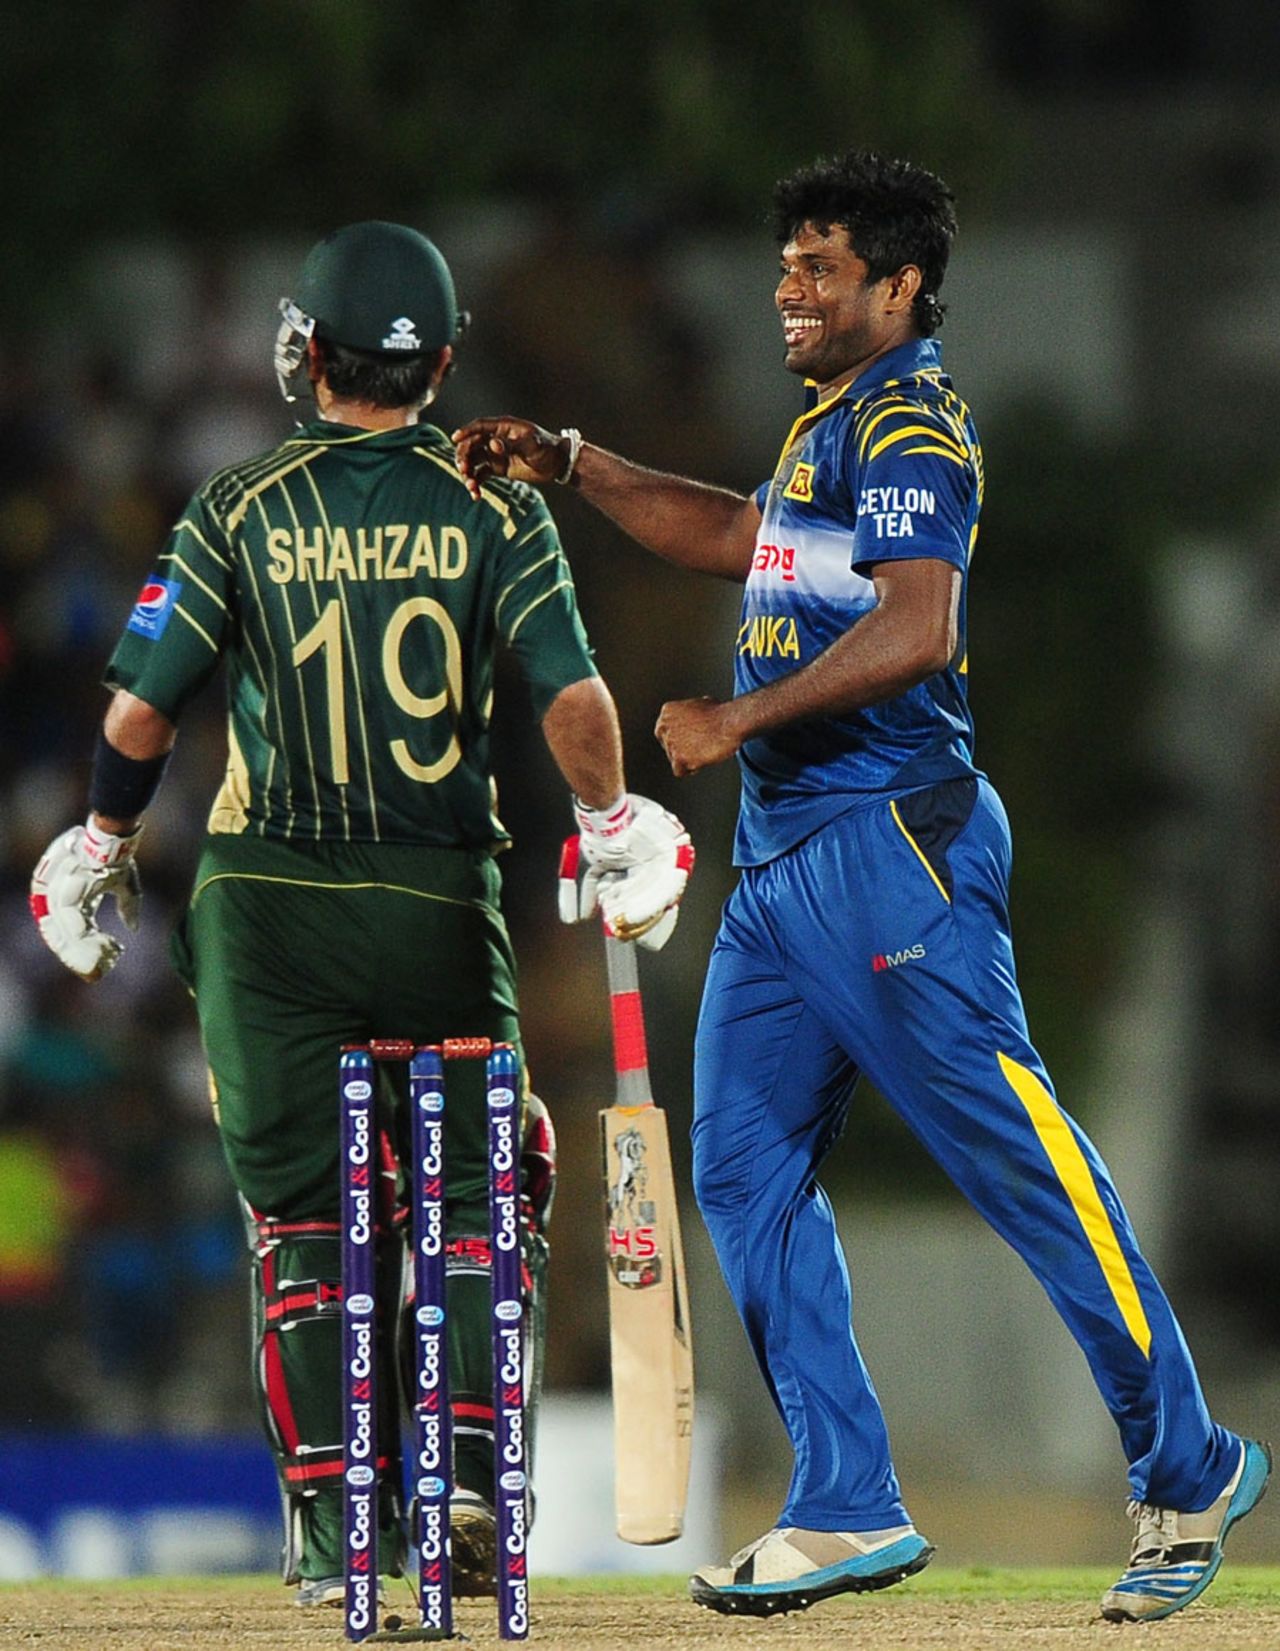 Seekkuge Prasanna exults after getting Ahmed Shehzad, Sri Lanka v Pakistan, 2nd ODI, Hambantota, August 26, 2014